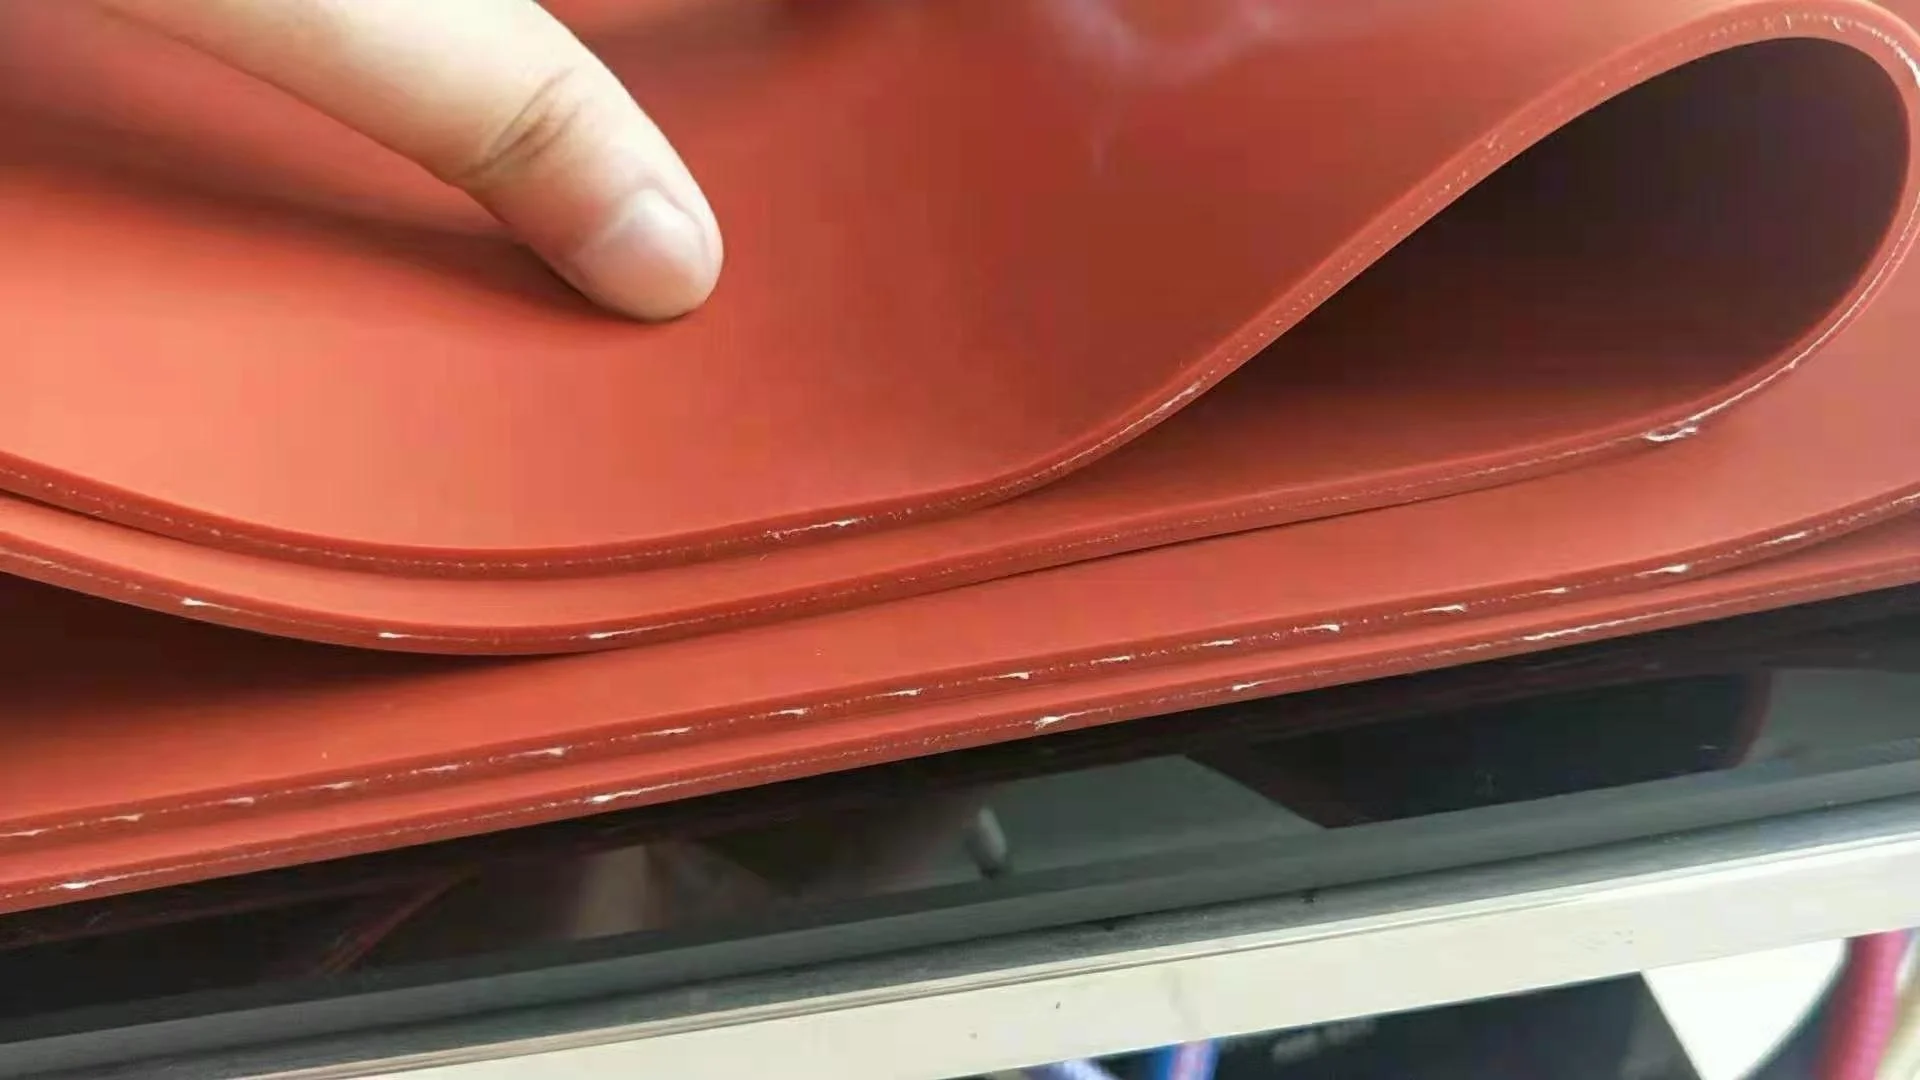 Heat resistant seamless silicone conveyor belt for zipper bag making machine